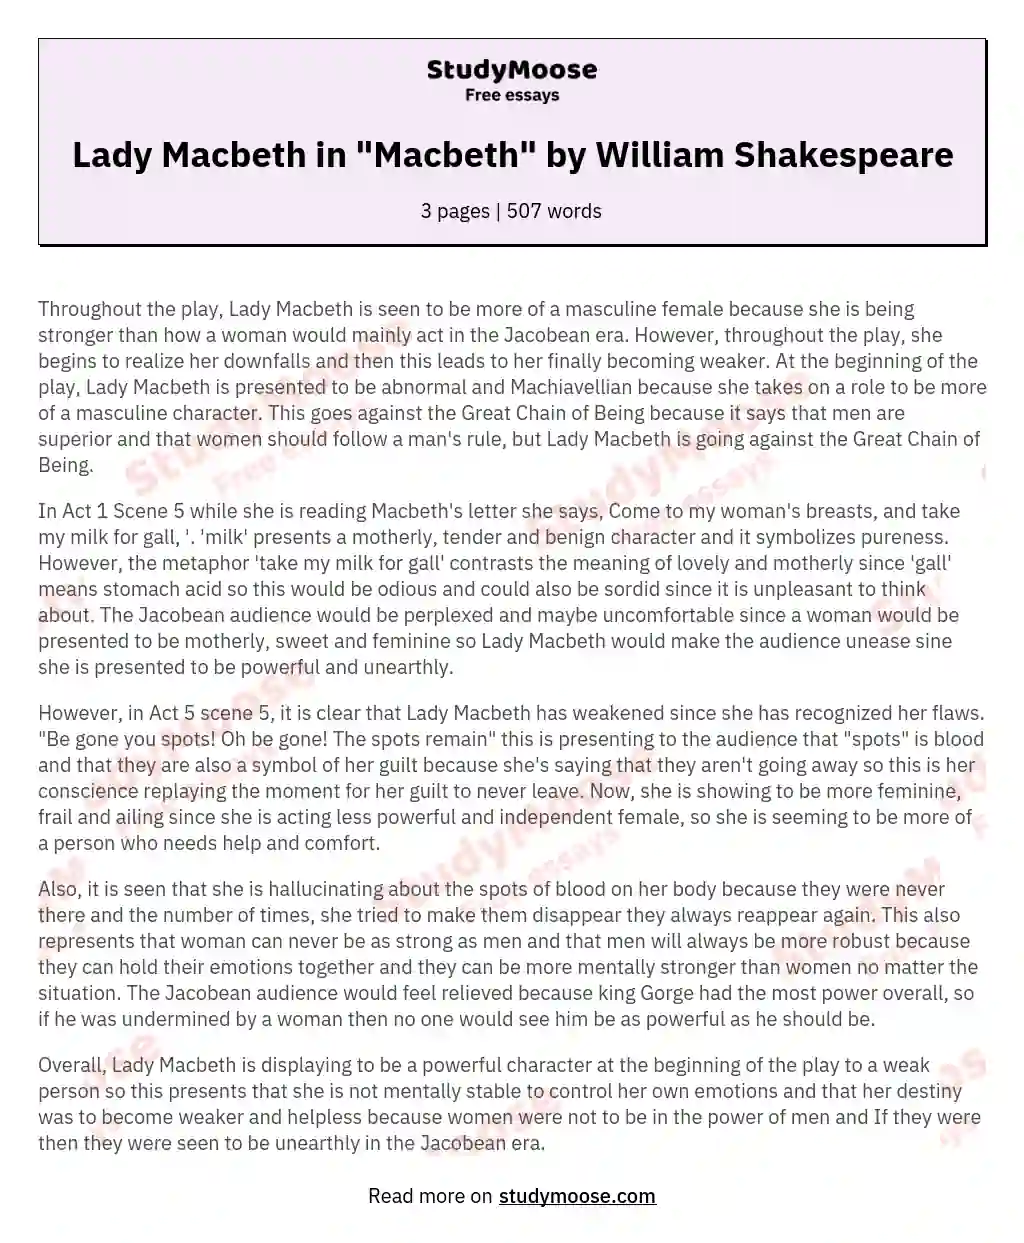 Lady Macbeth in "Macbeth" by William Shakespeare